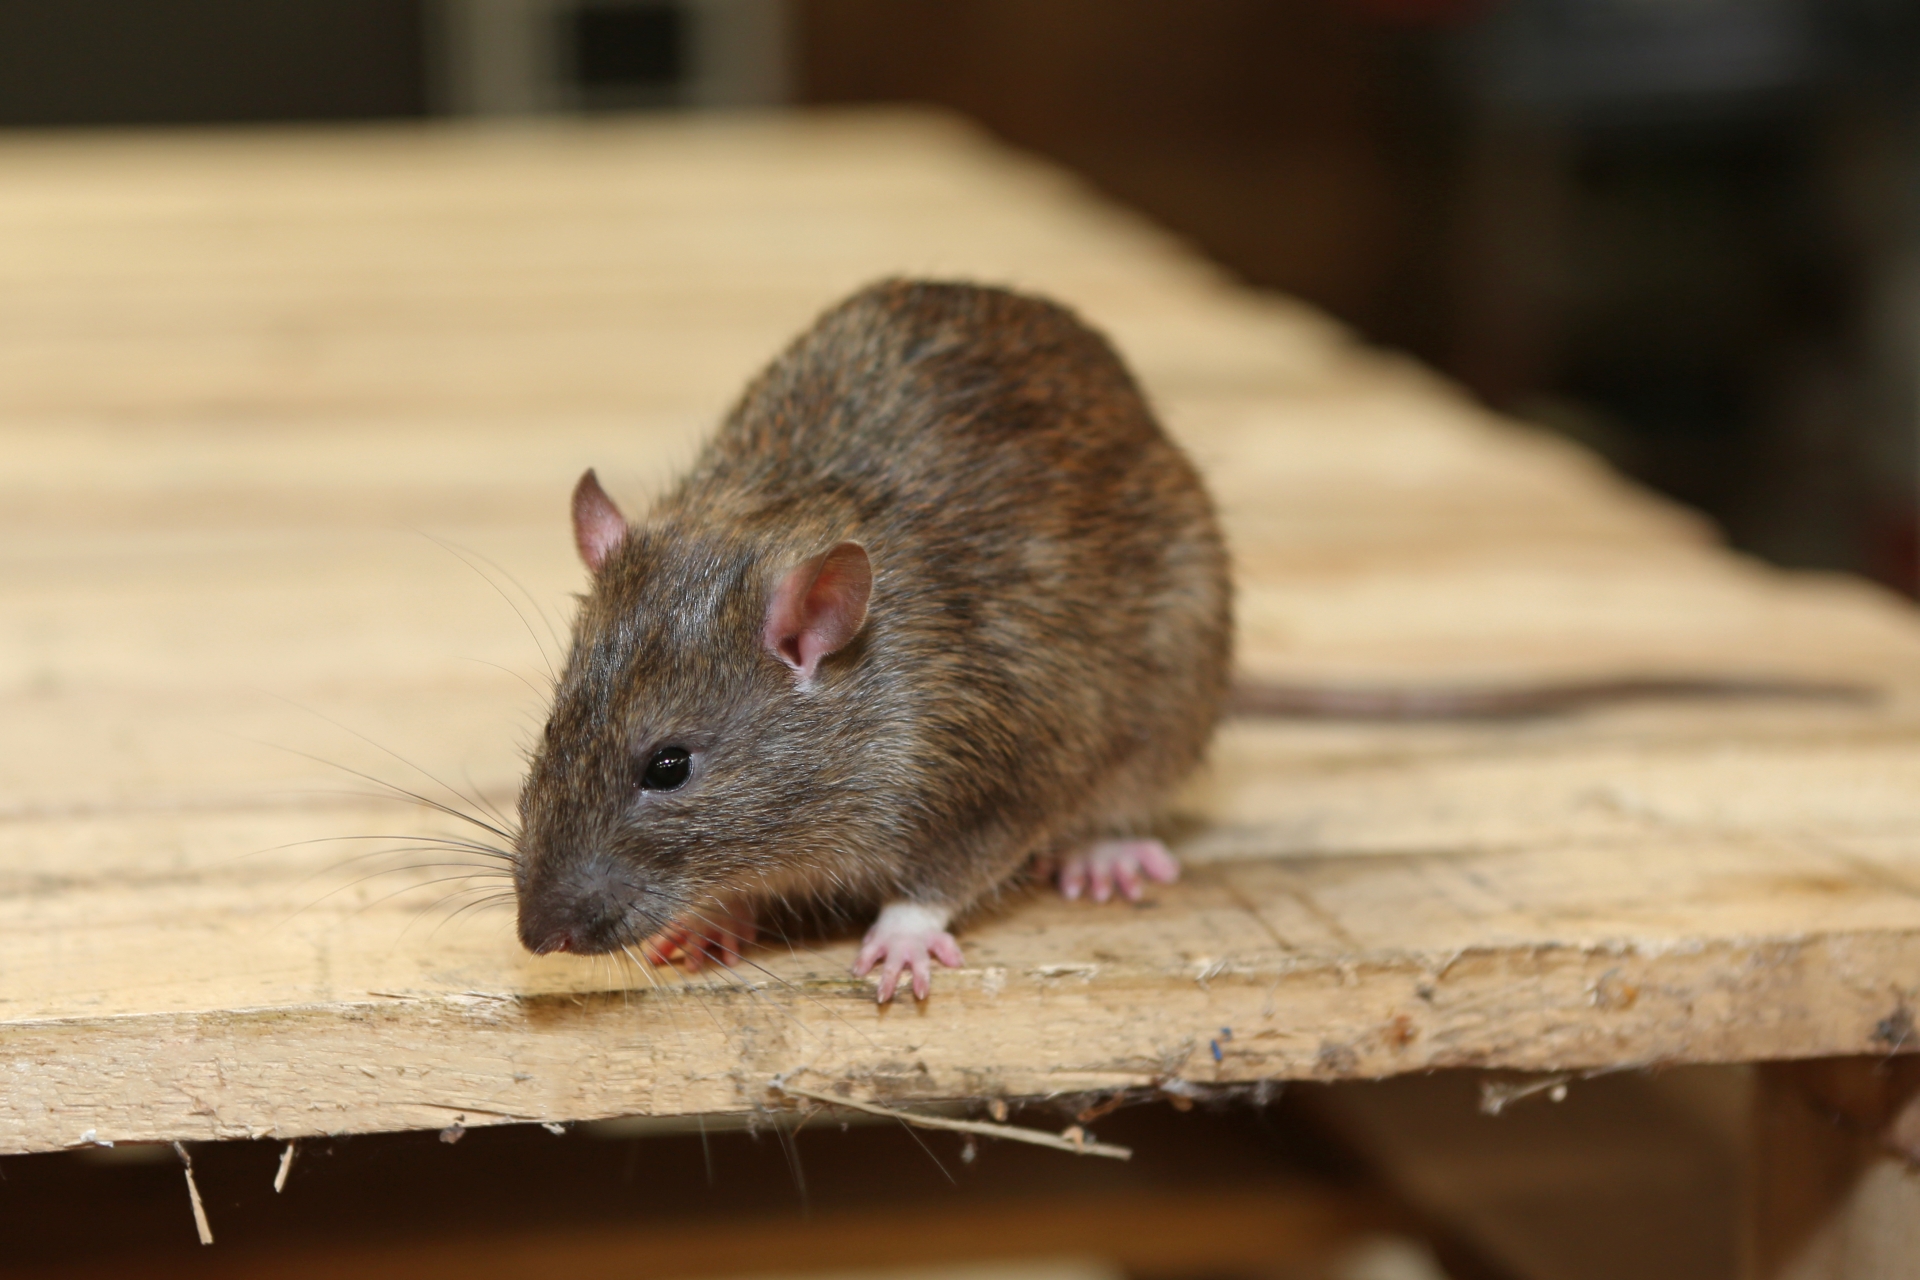 Rat Control, Pest Control in Epsom, Horton, Longmead, KT19. Call Now 020 8166 9746